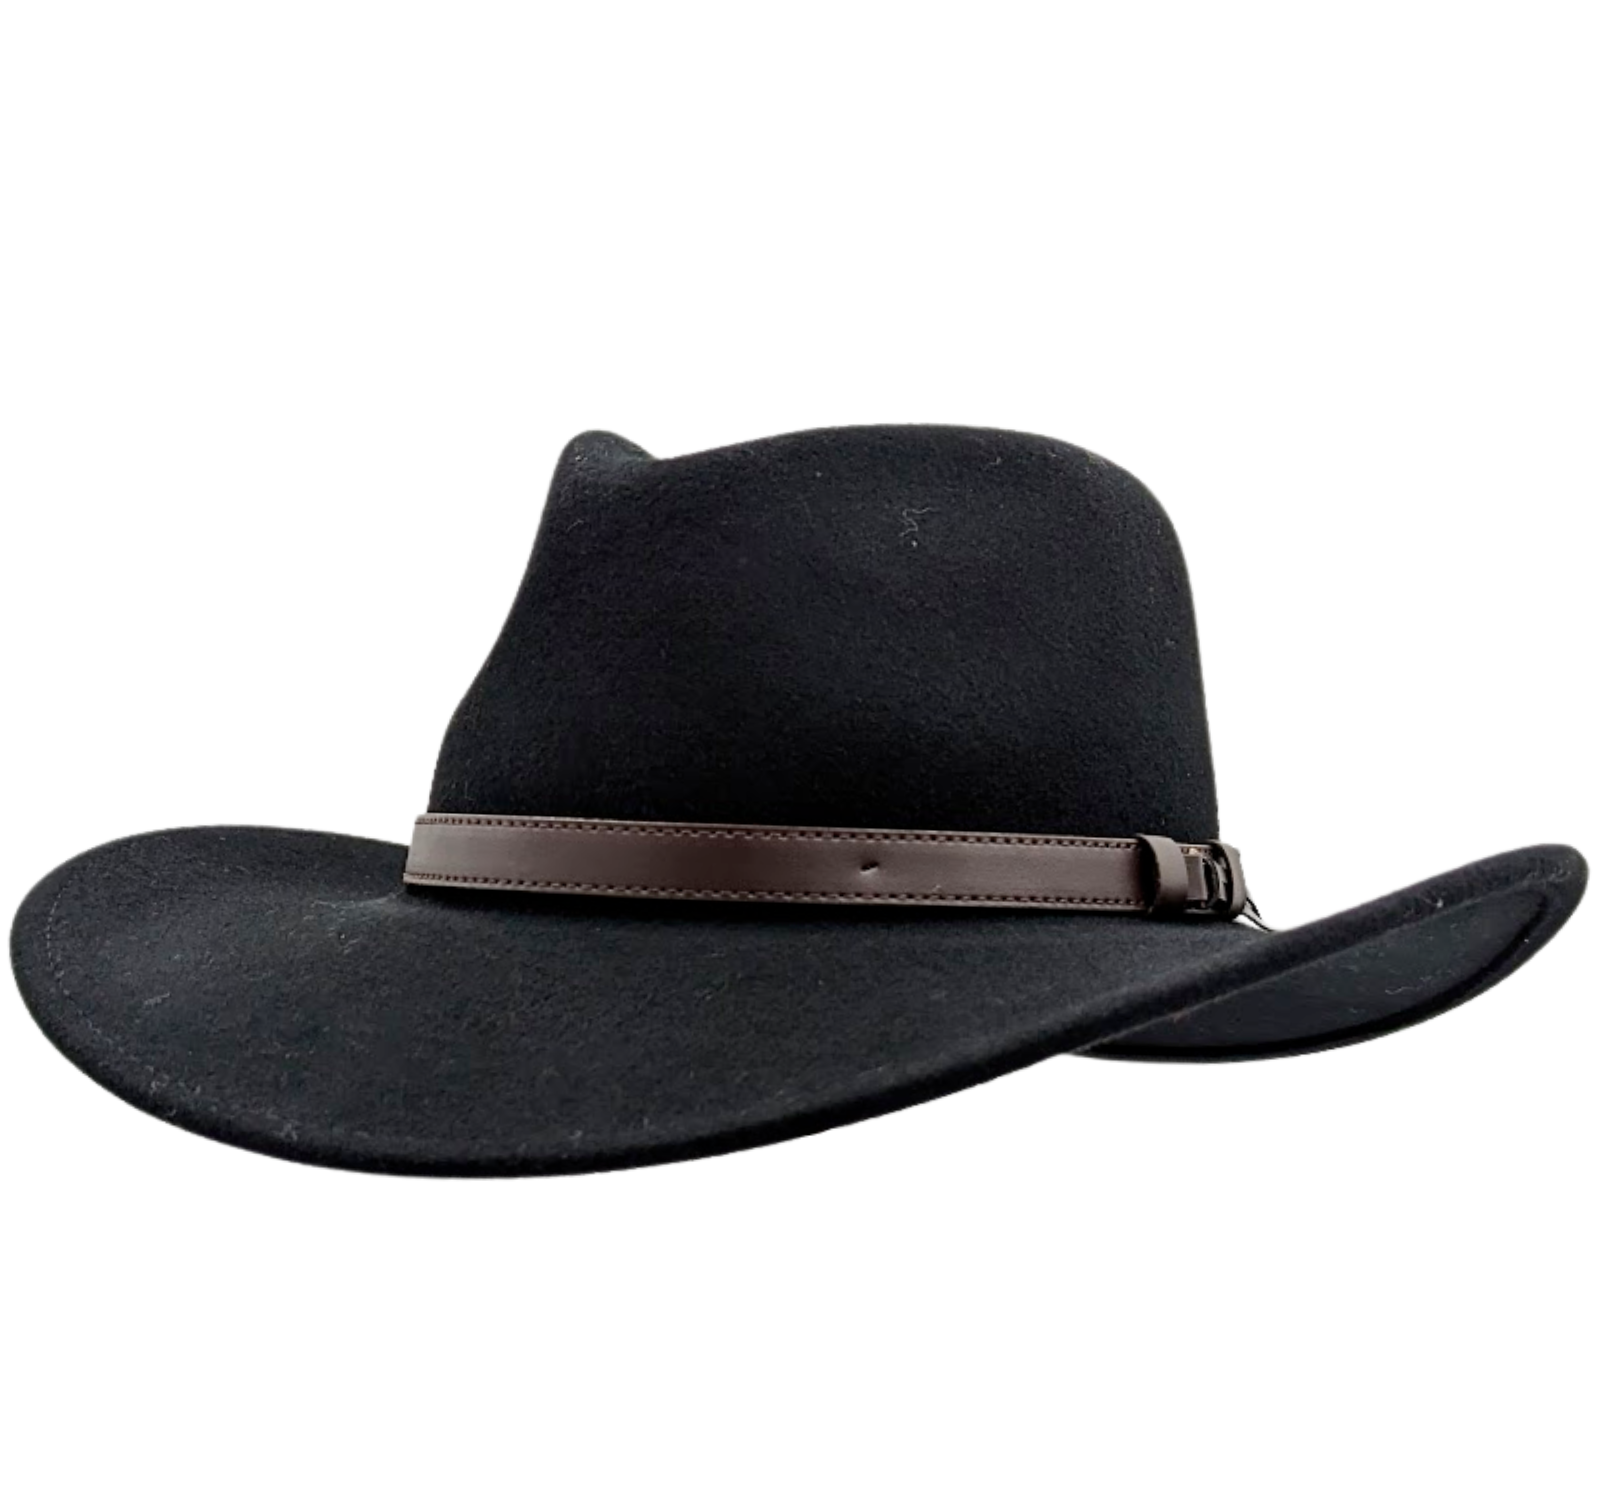 Stansmore Straw Cowboy Hat